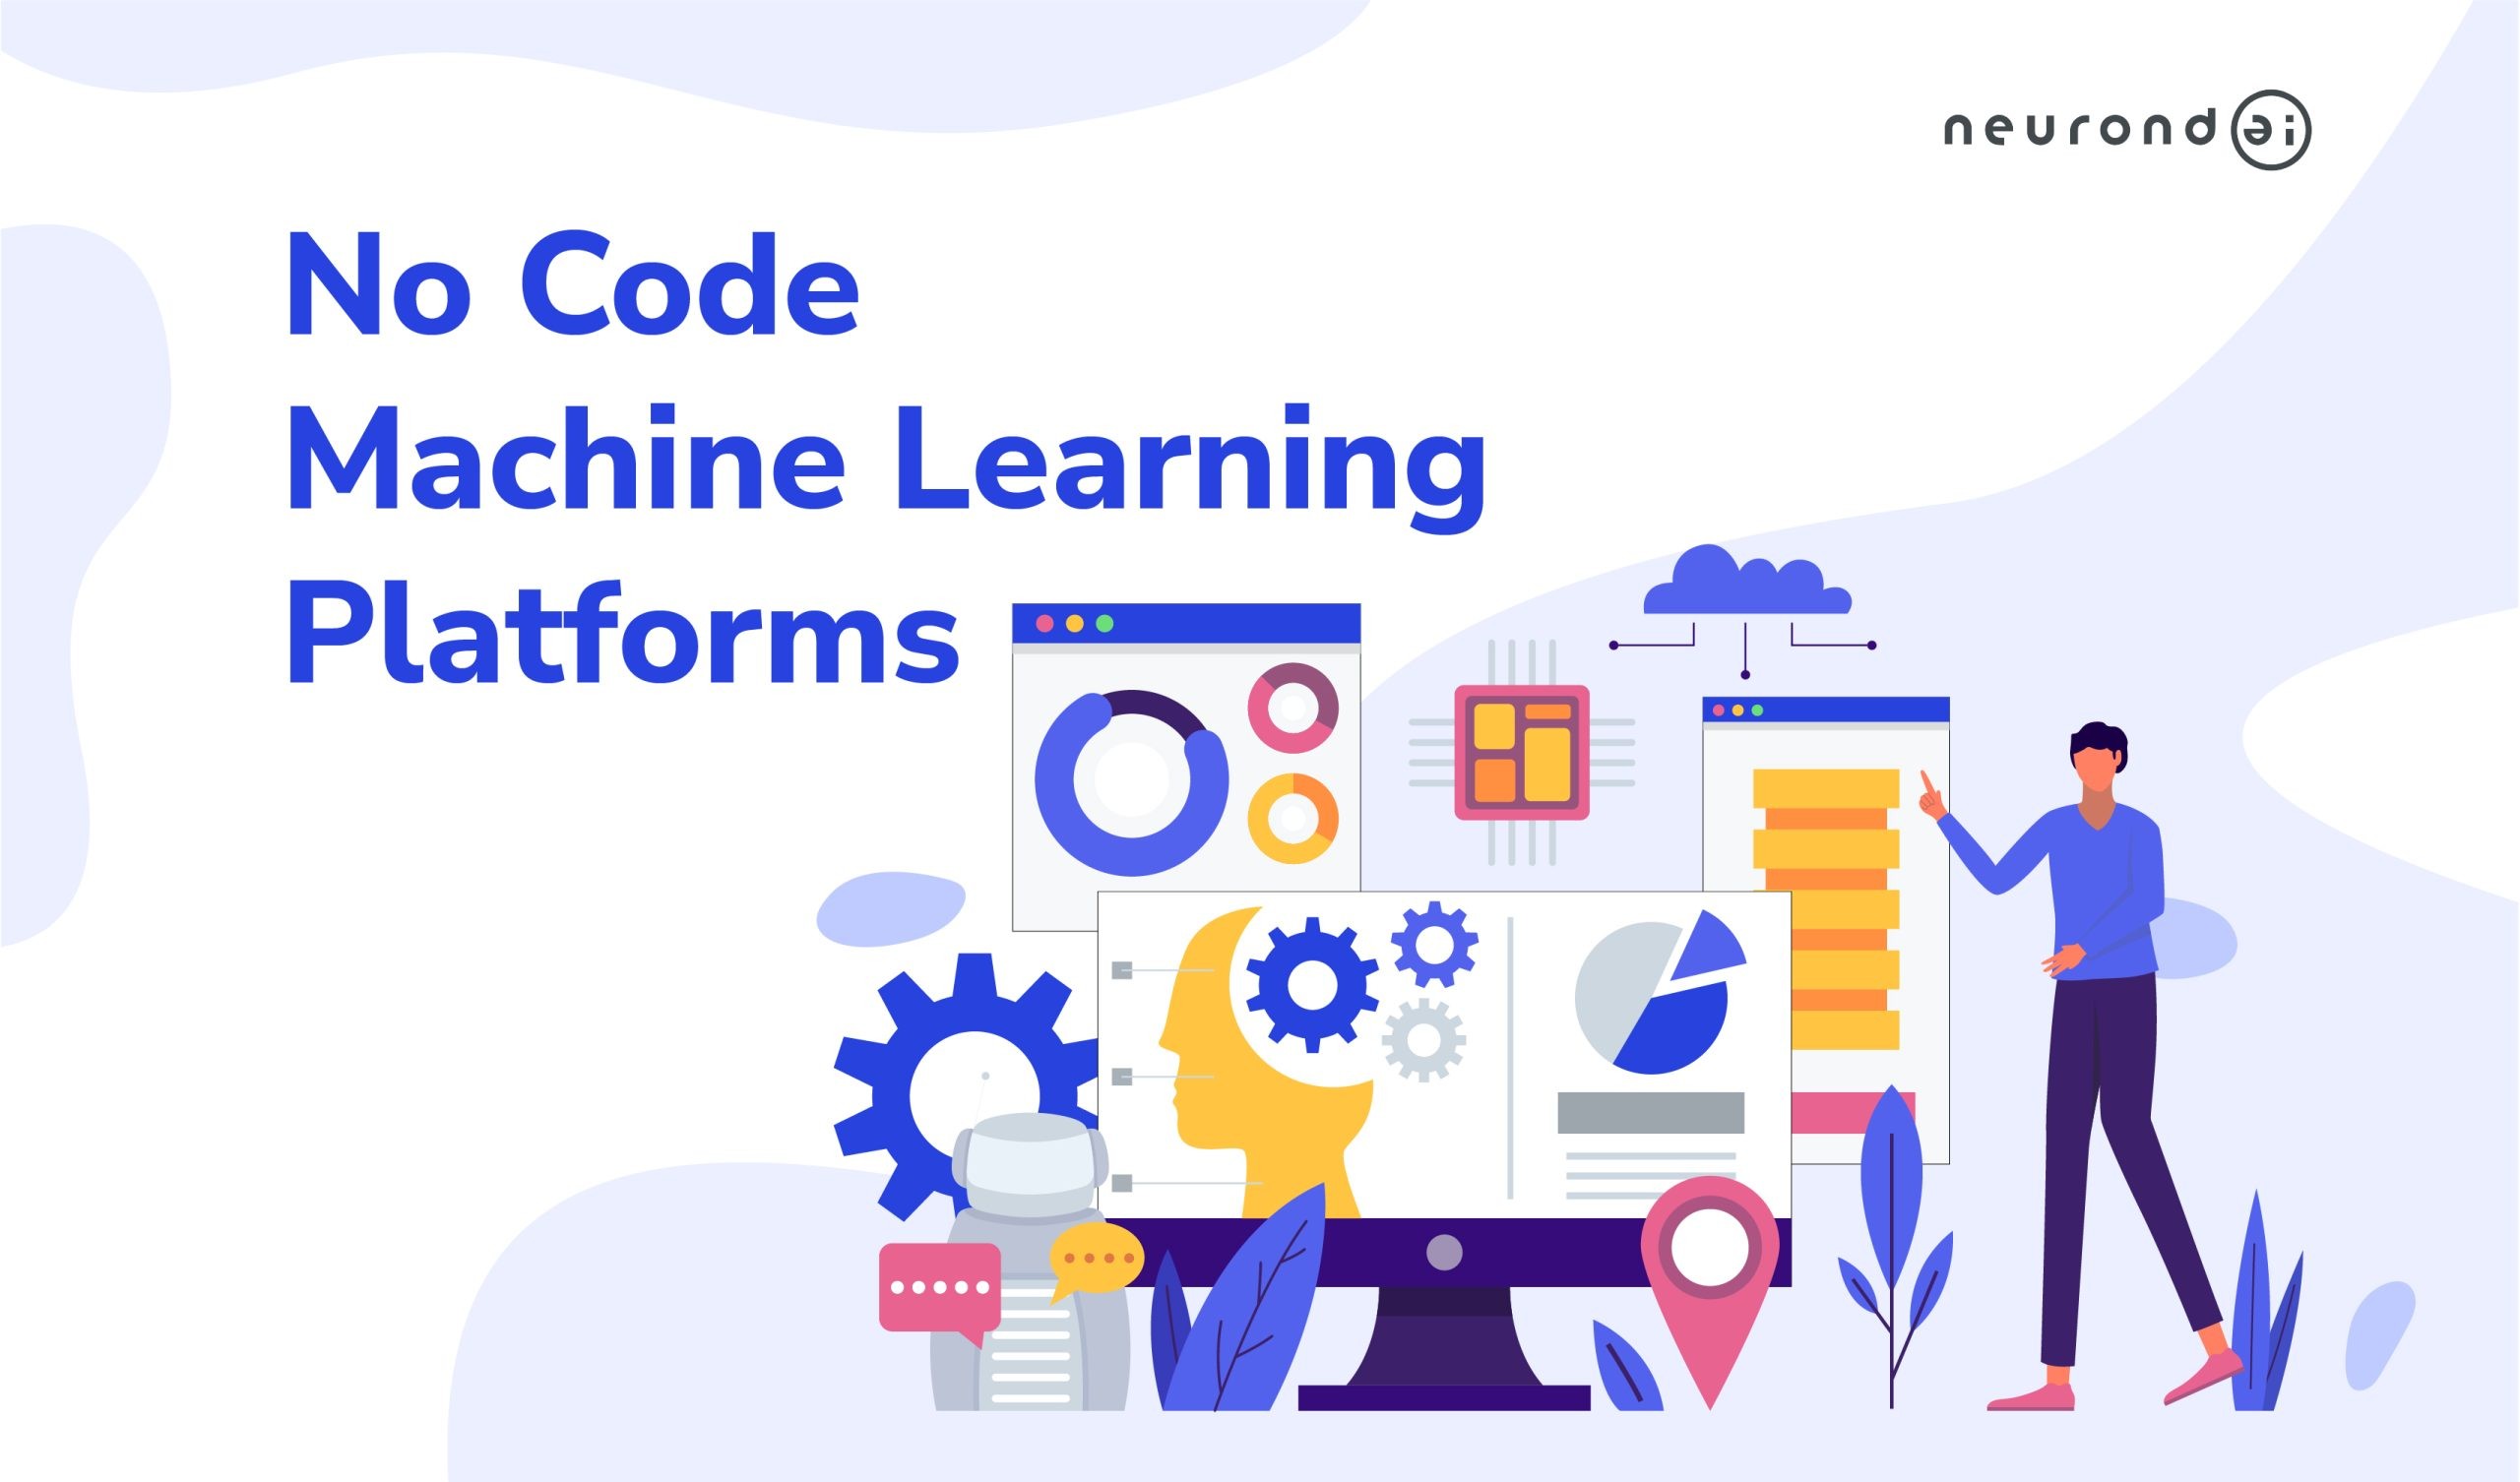 No Code Machine Learning Platforms